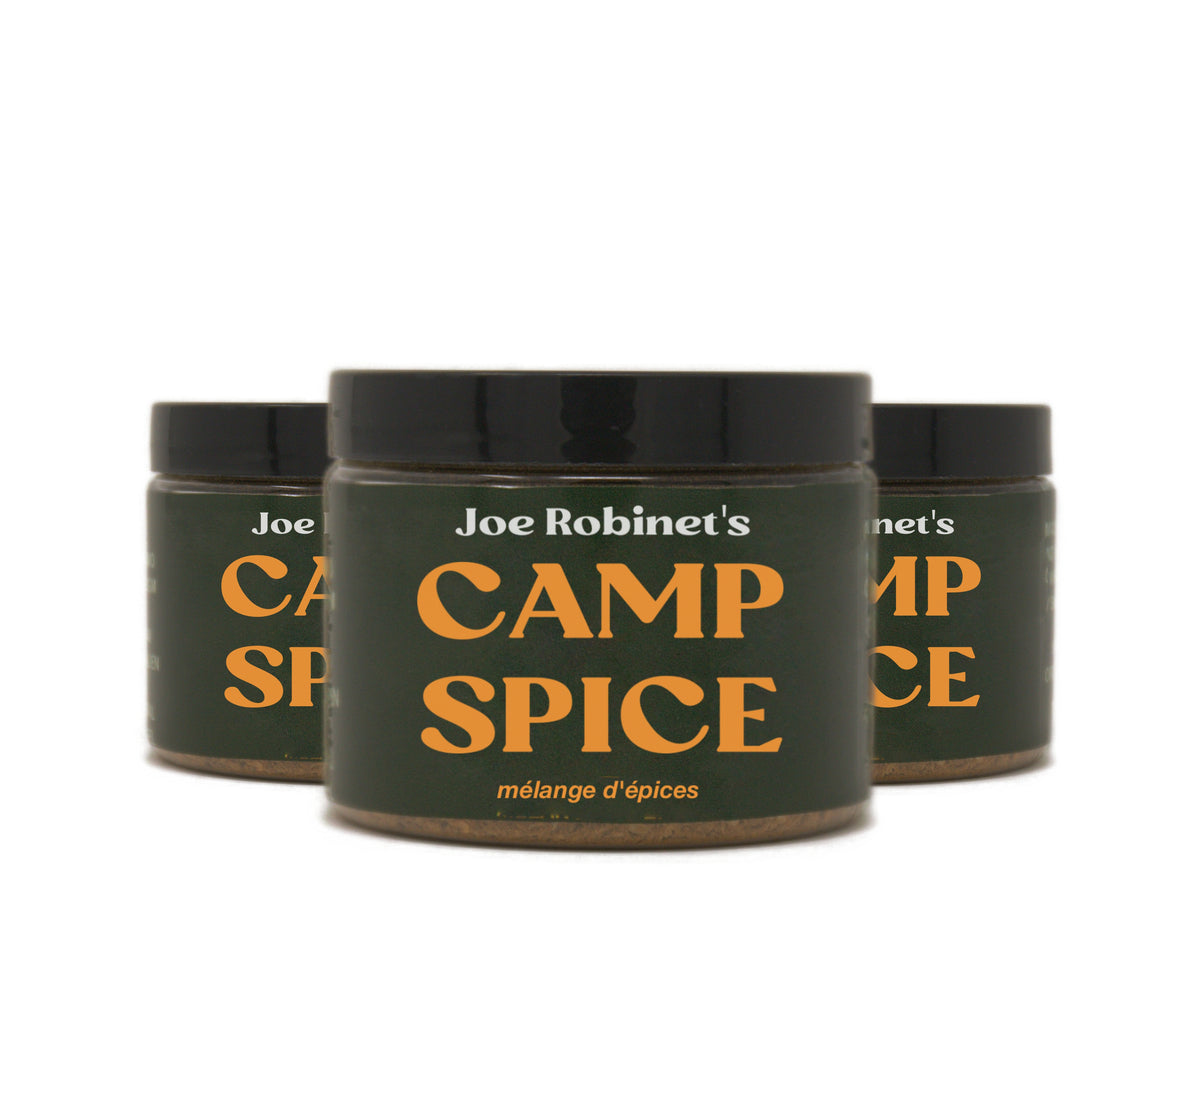 Joe Robinet's Camp Spice 3-PACK